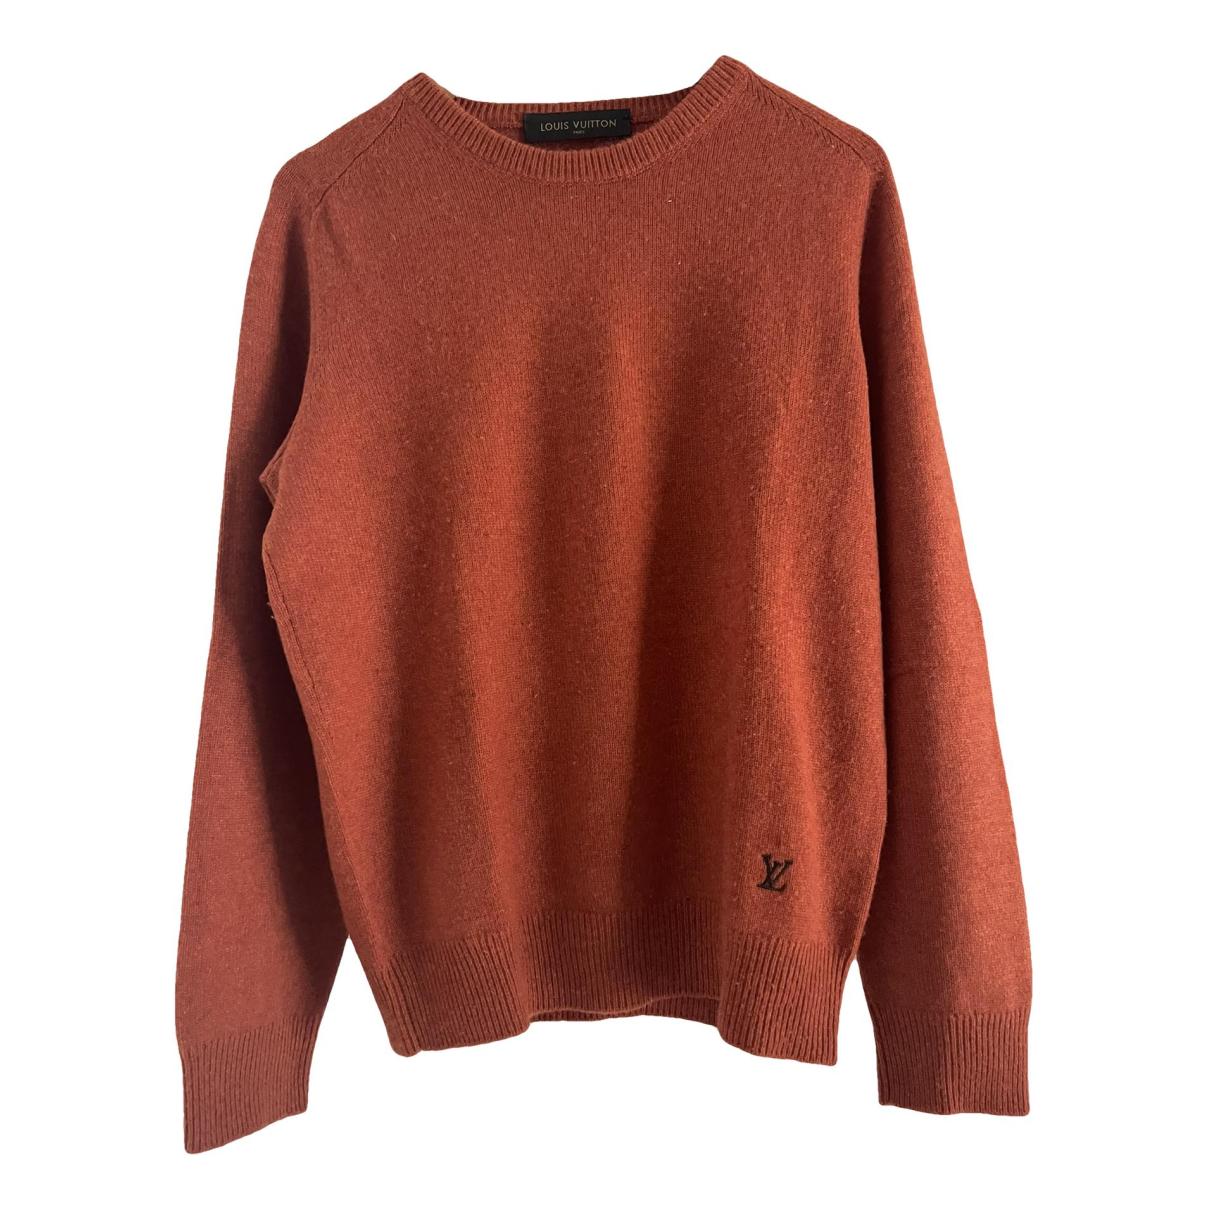 LV Doves Quilted Sweatshirt - Luxury Orange